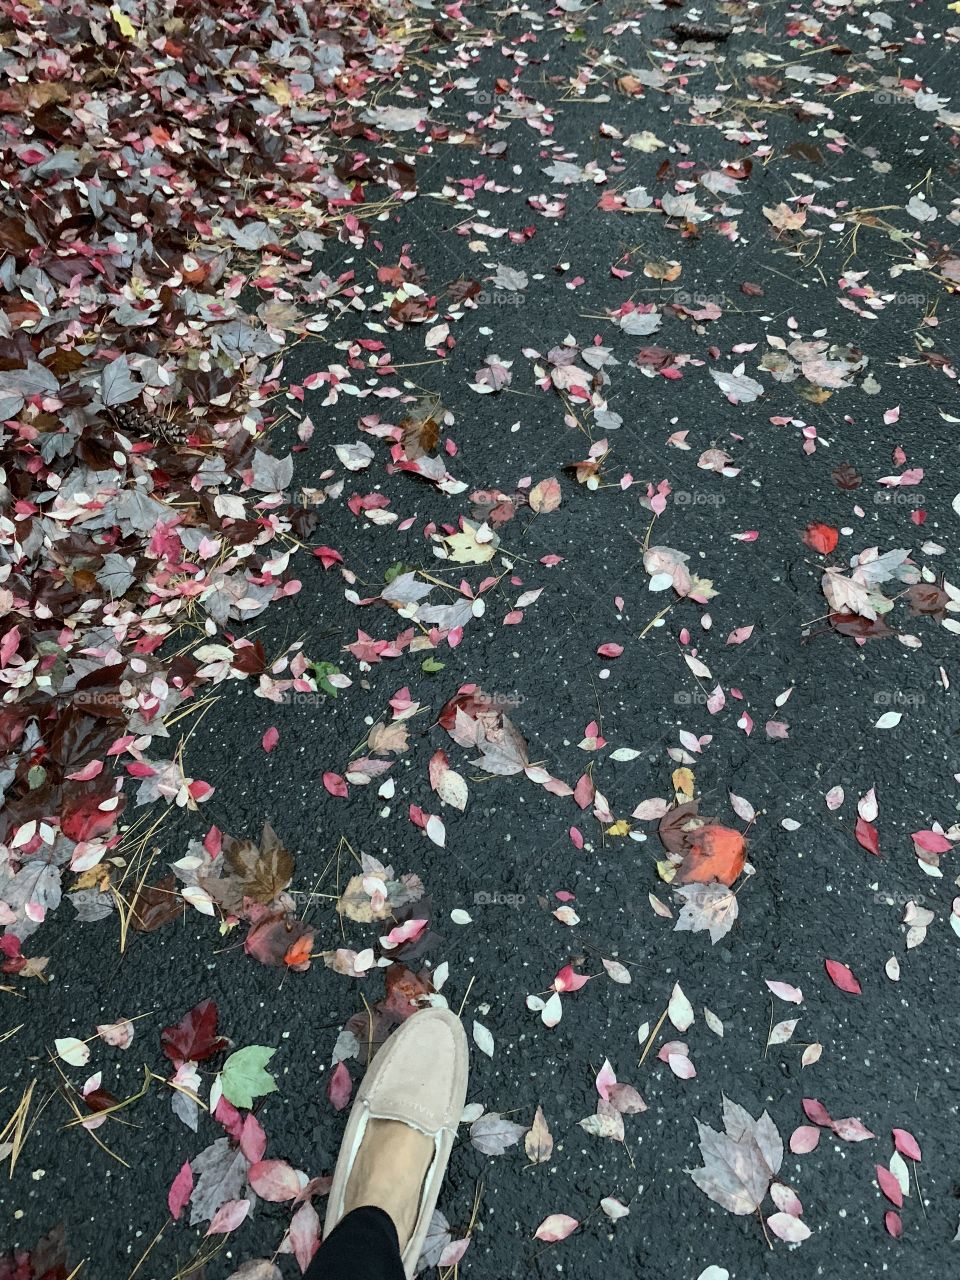 Walking in the leaves fall season